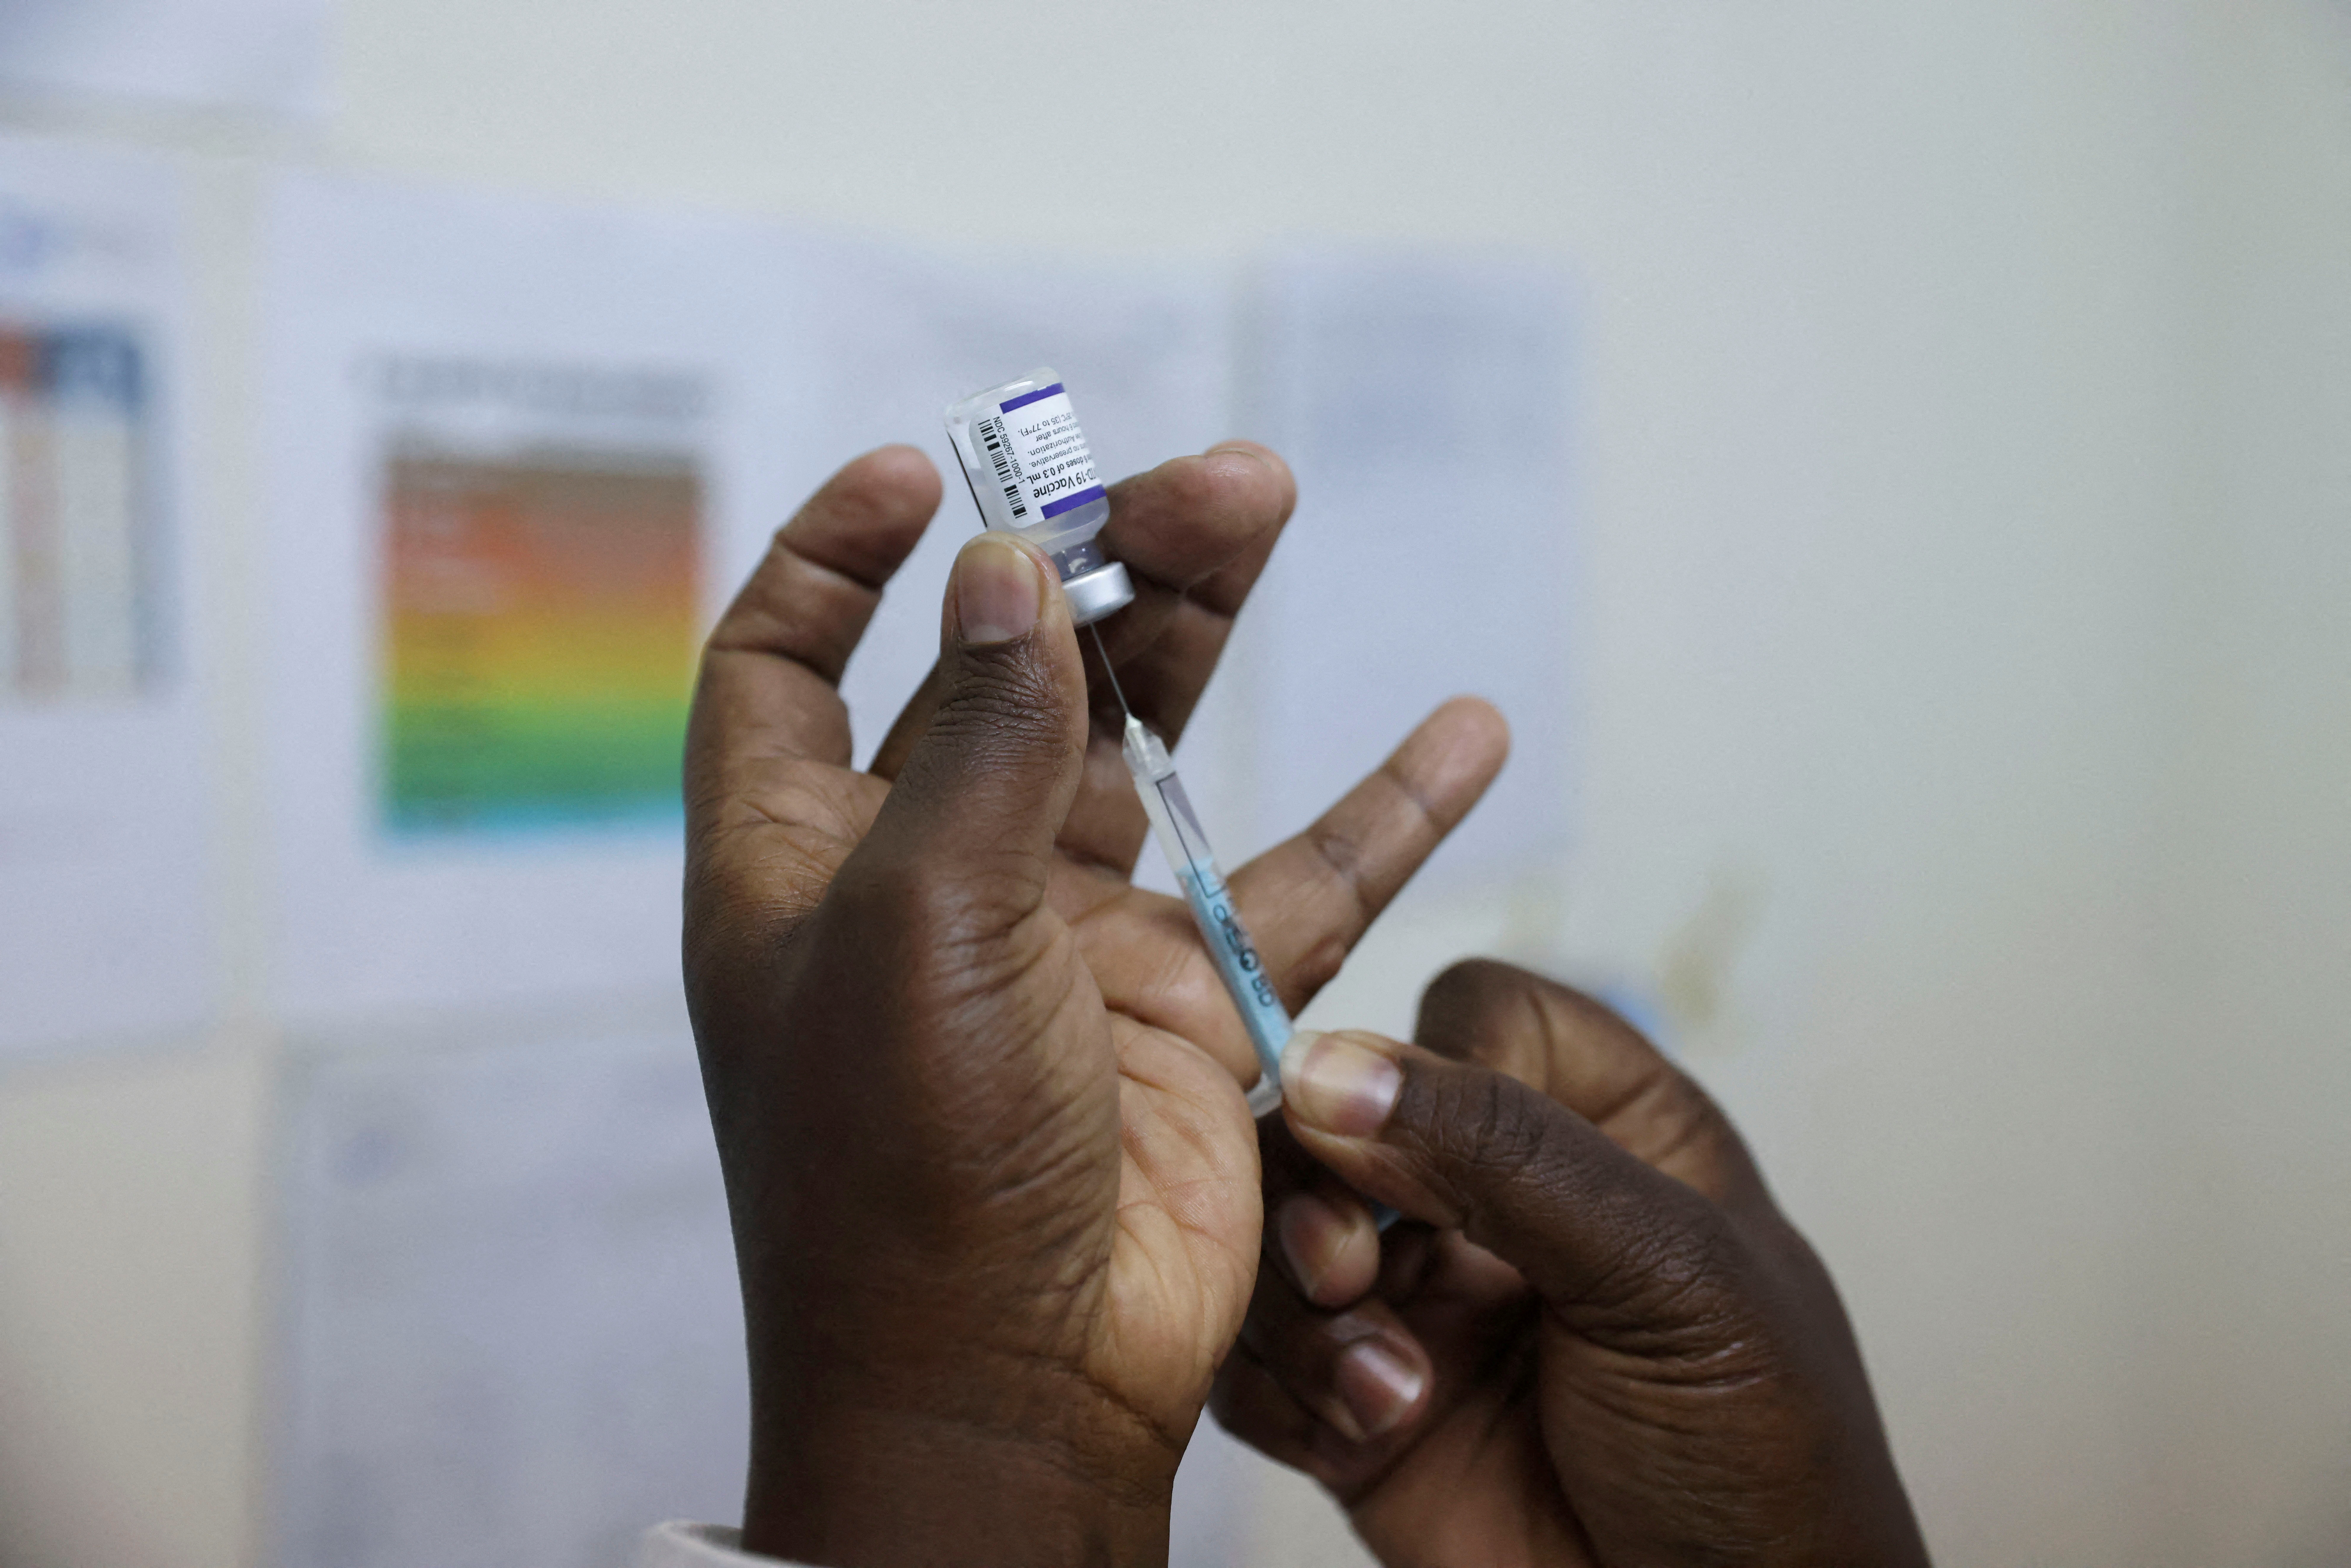 A health worker prepares a dose of Pfizer/BioNTech's COVID-19 vaccine, at the Penda health center in Nairobi